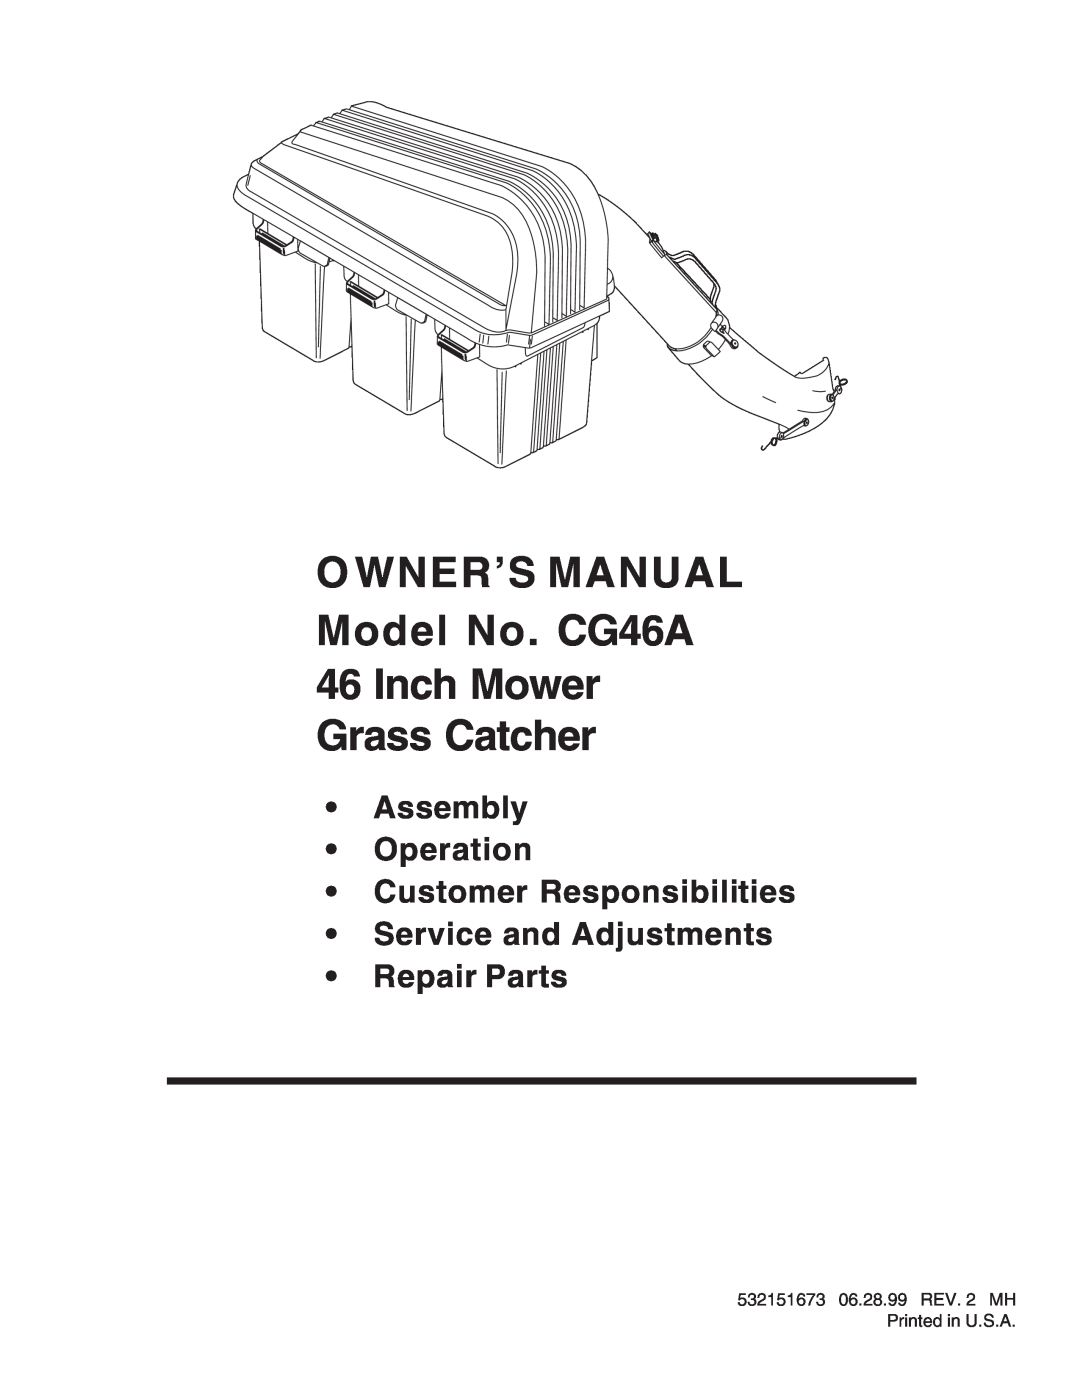 Husqvarna CG46A owner manual Assembly Operation Customer Responsibilities Service and Adjustments, Repair Parts 